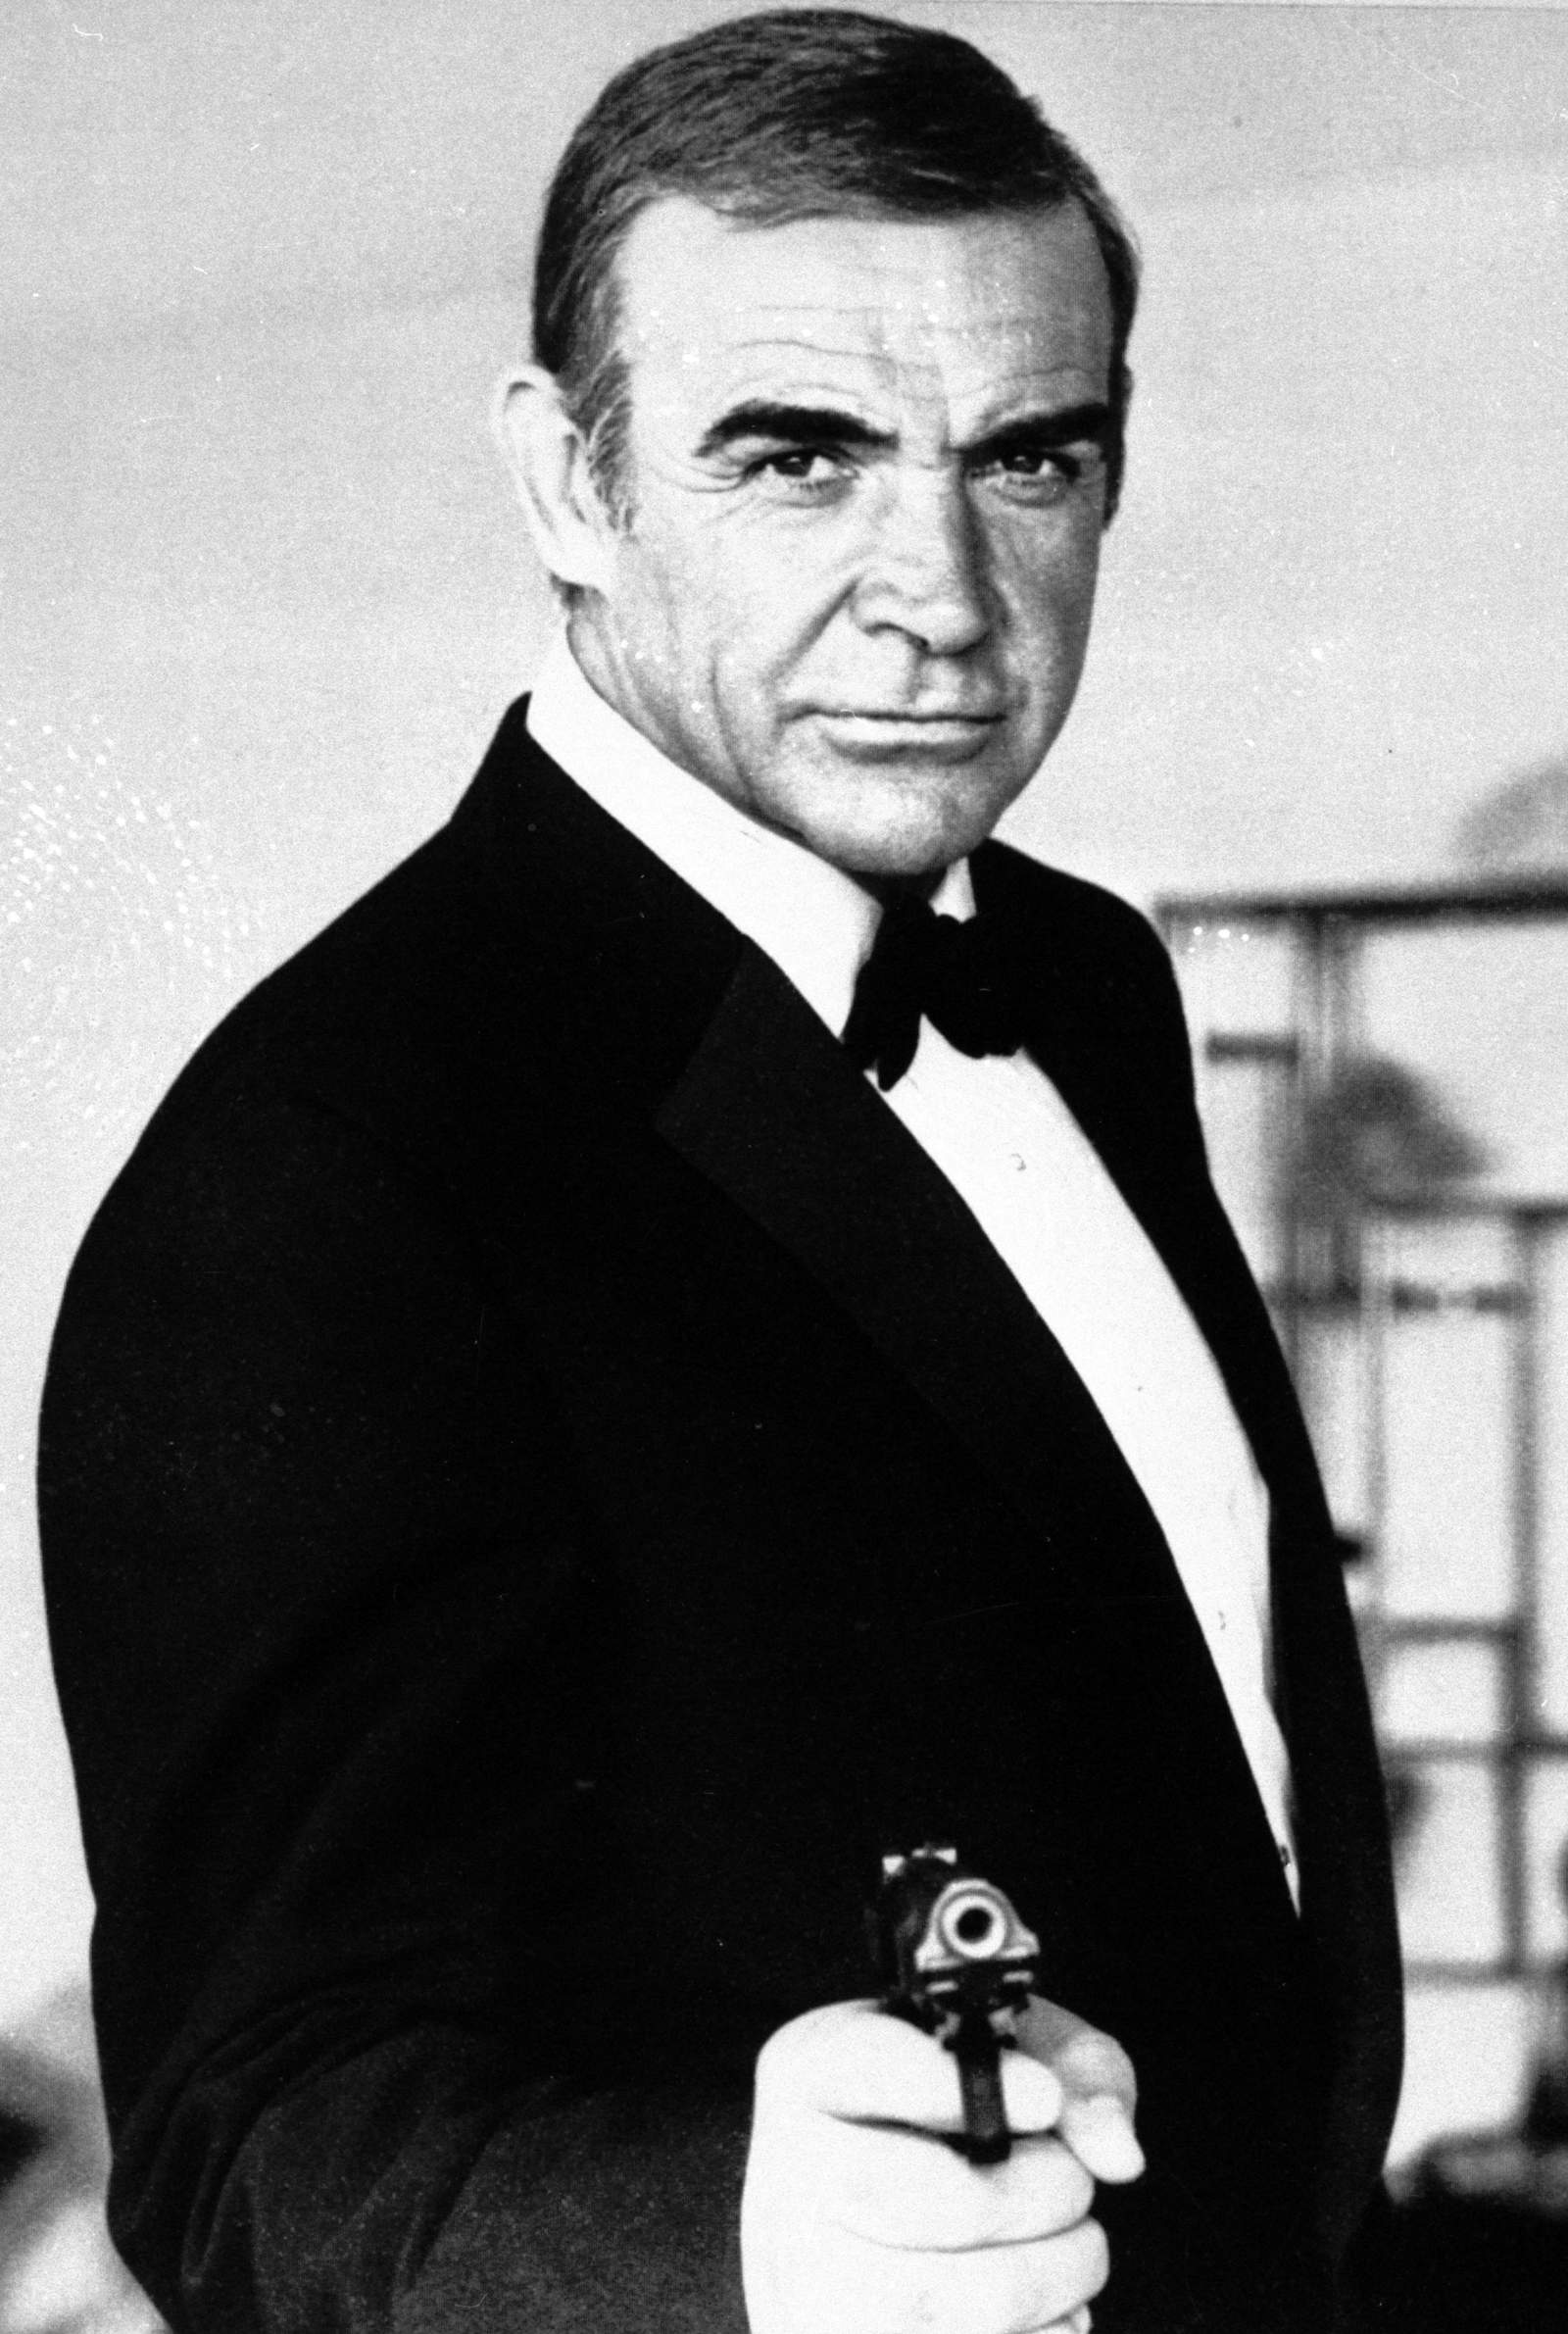 Actor Sean Connery, the ‘original’ James Bond, dies at 90